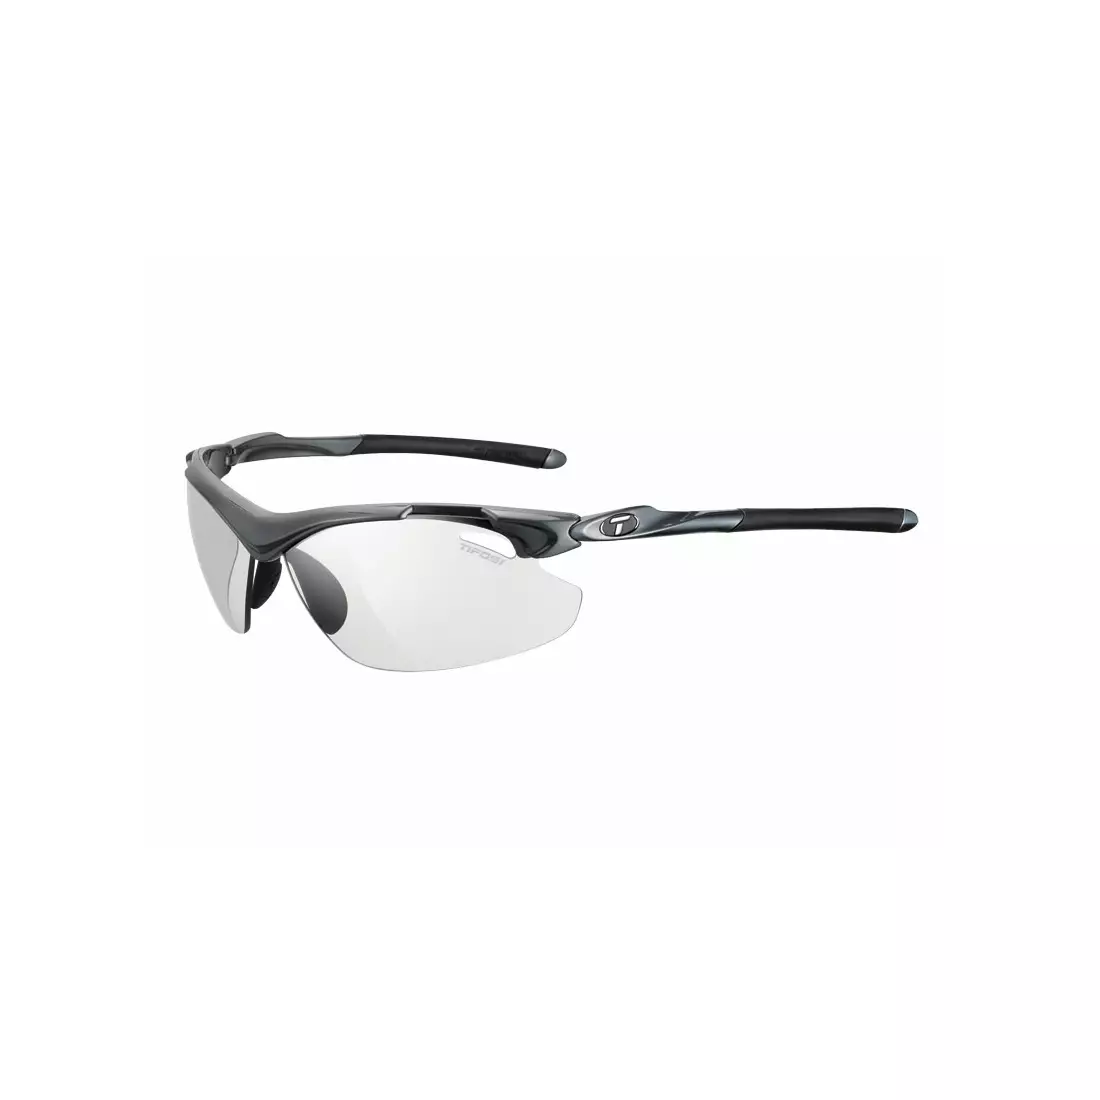 Photochromic glassesTIFOSI TYRANT 2.0 FOTOTEC gunmetal (Light Night fotochrom) TFI-1120300331